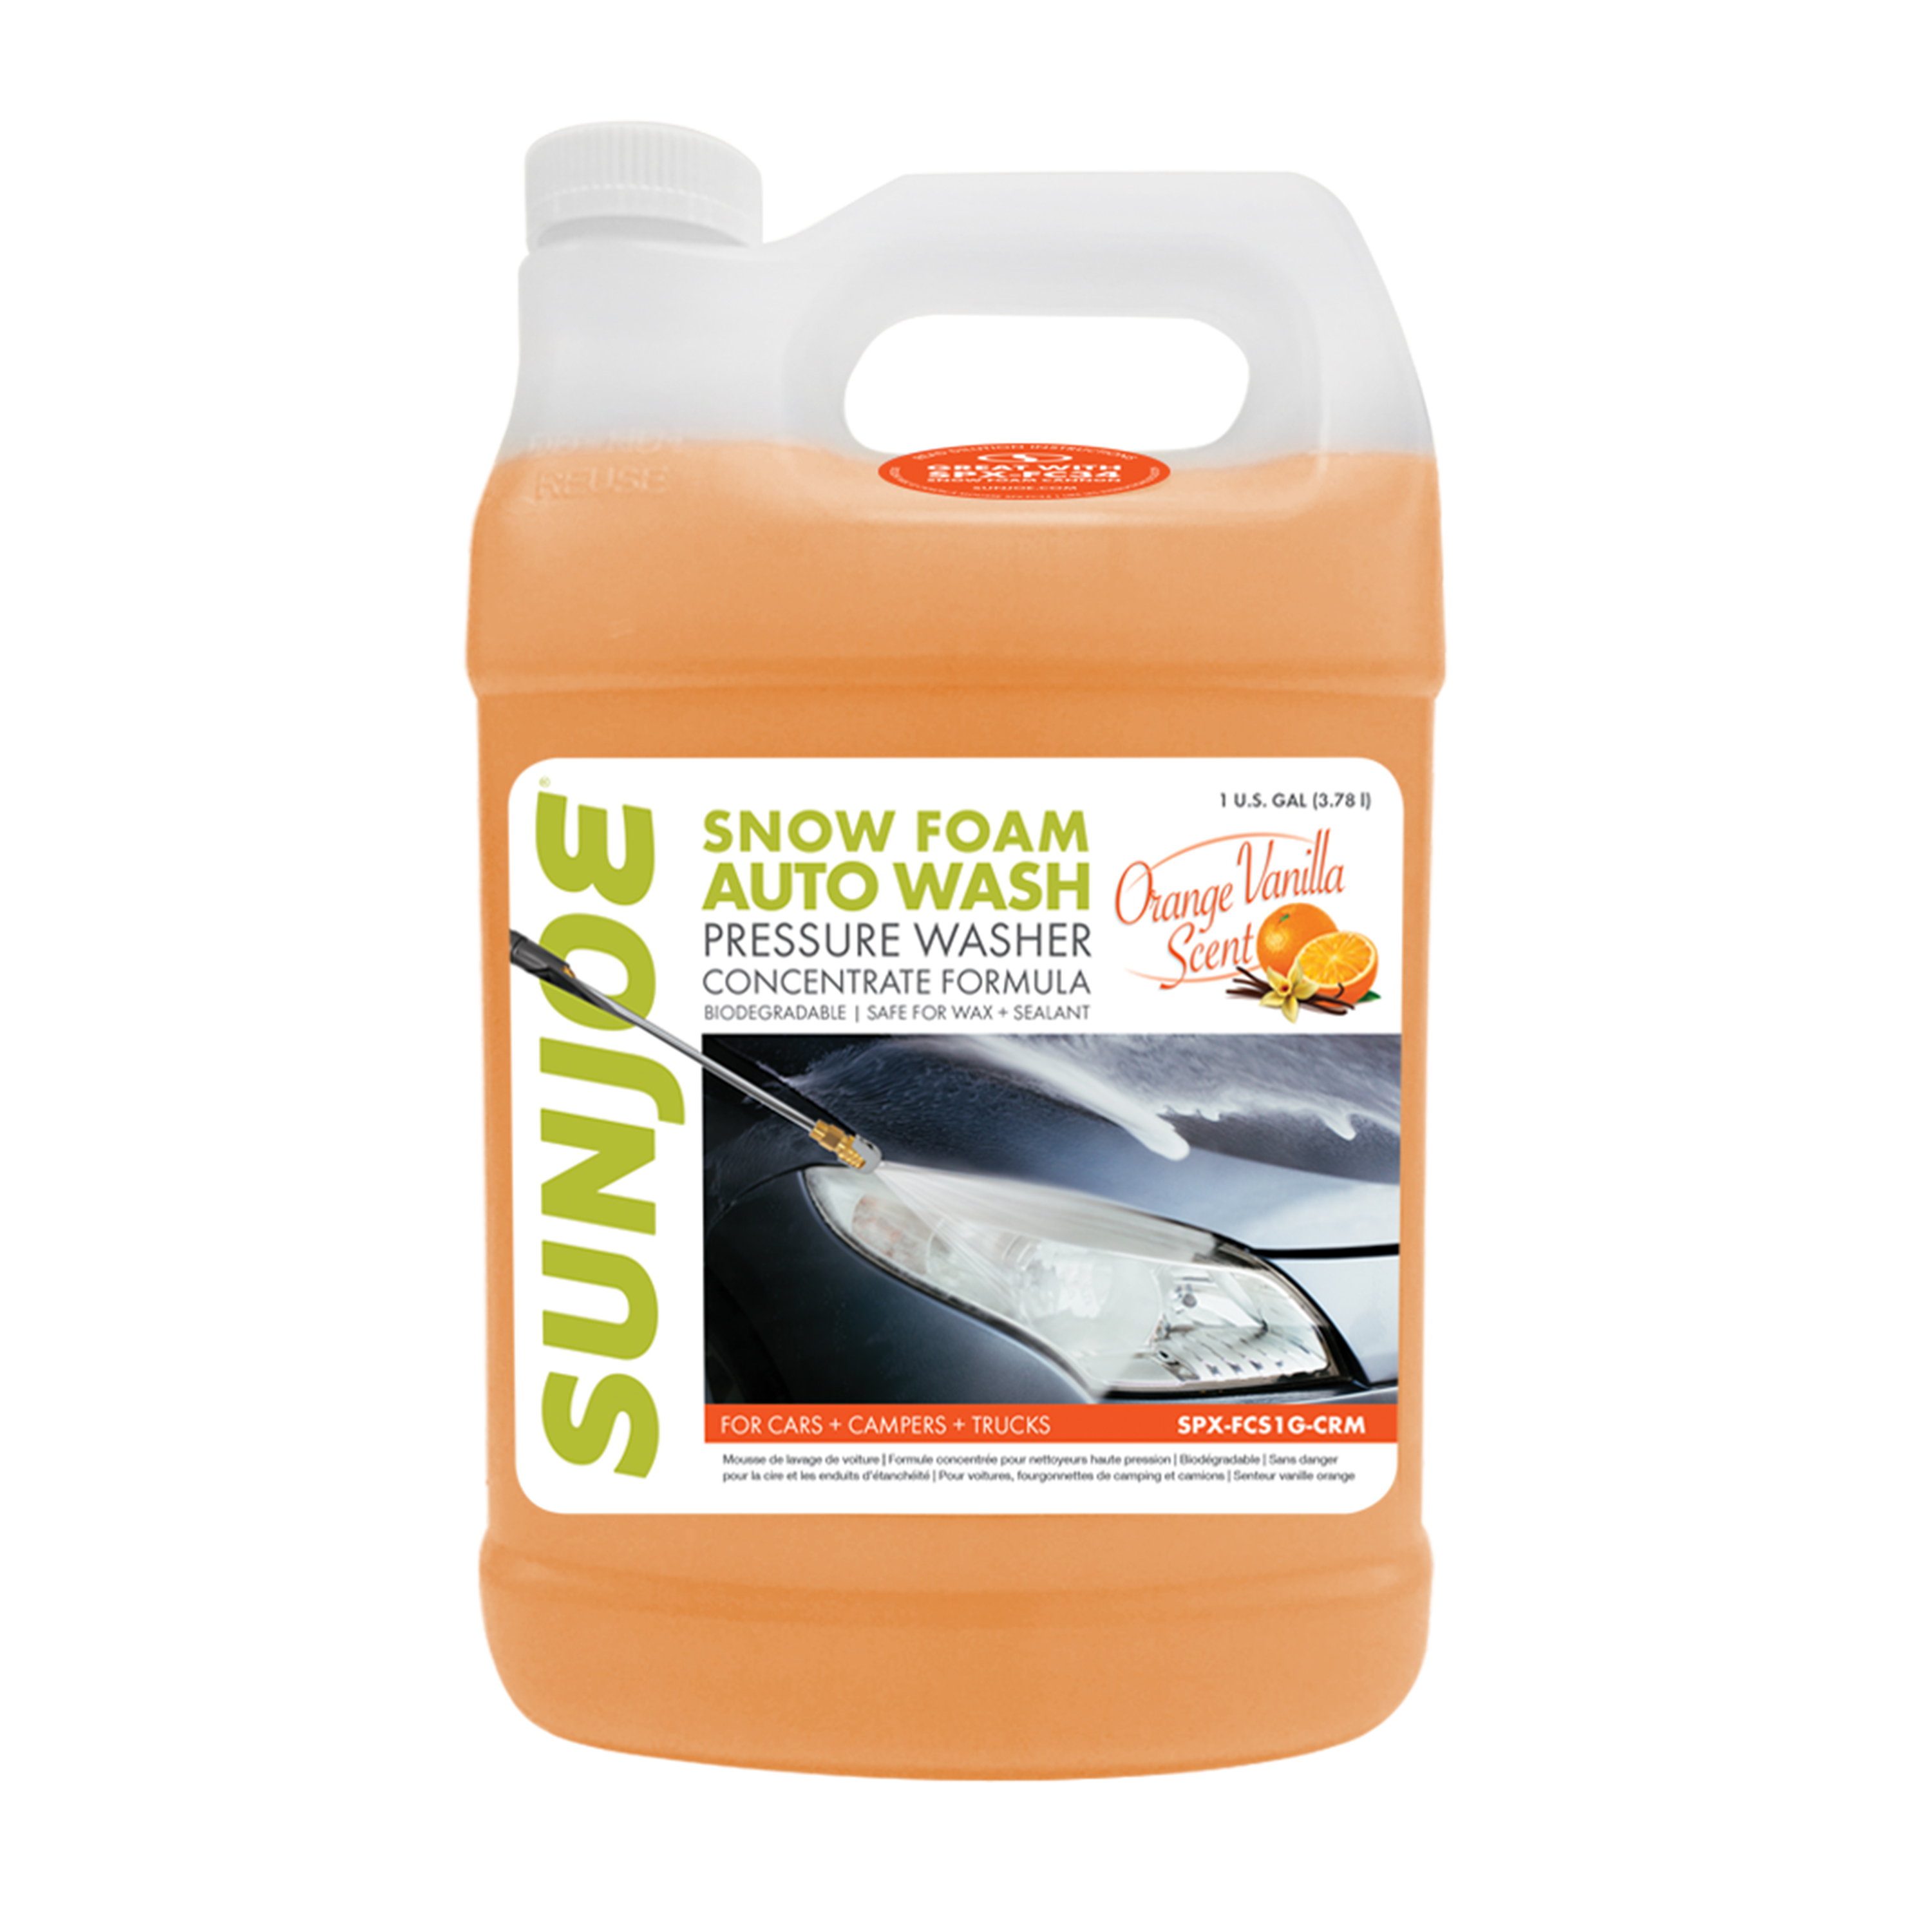 Adam's Mega Foam Gallon - pH Best Car Wash Soap For Foam Cannon, Pressure  Washer or Foam Gun | Concentrated Car Detailing & Cleaning Detergent Soap 